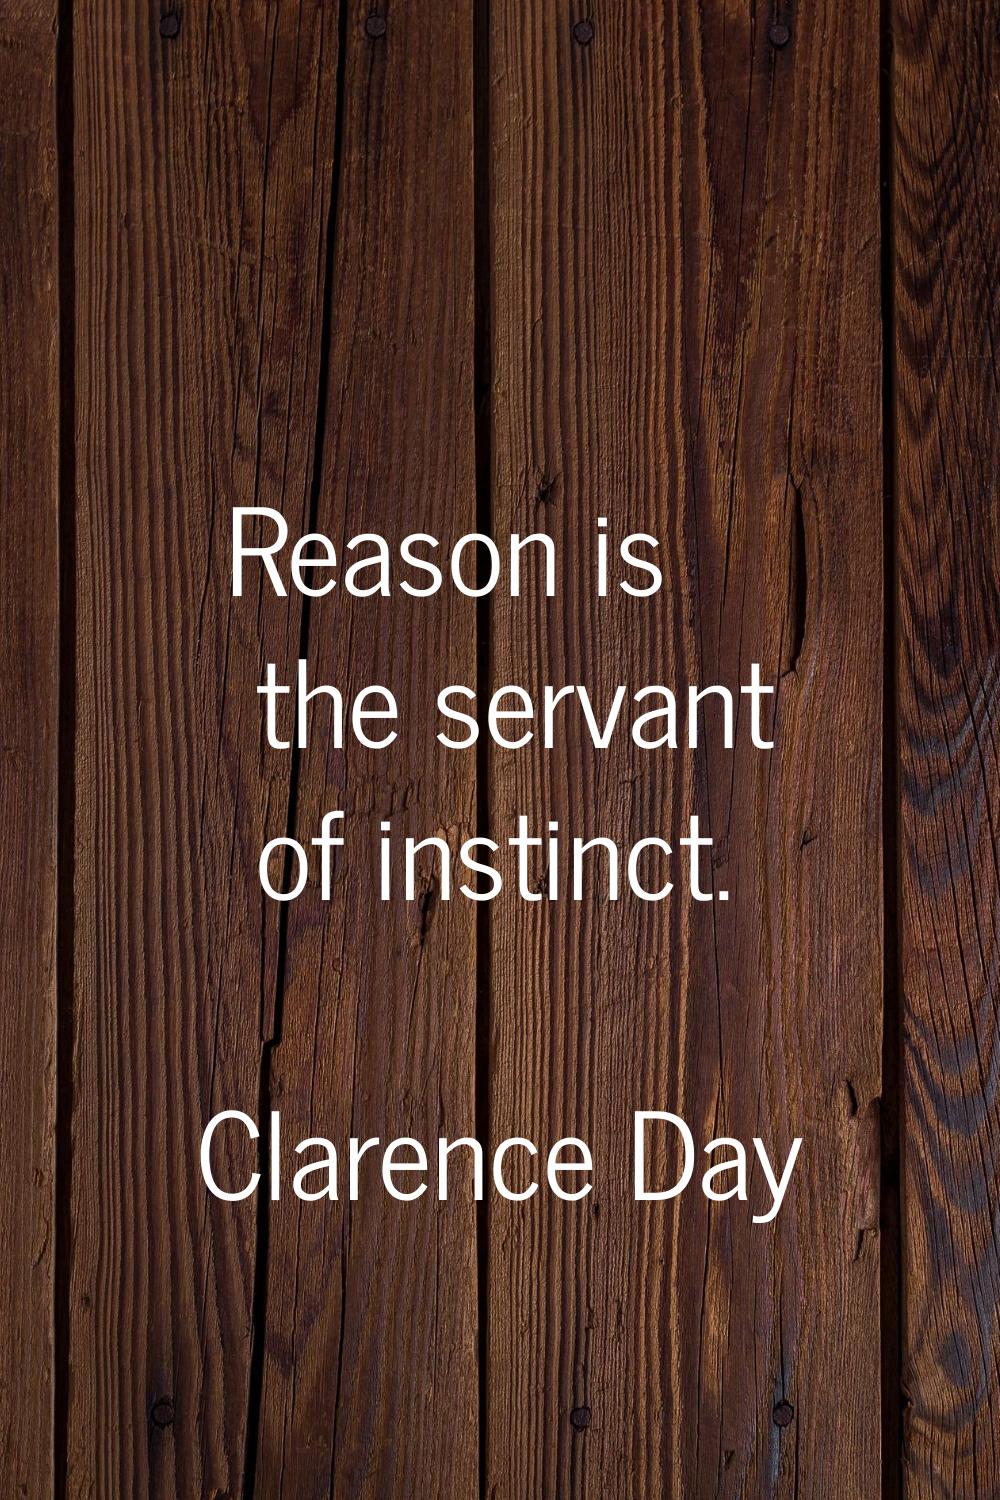 Reason is the servant of instinct.